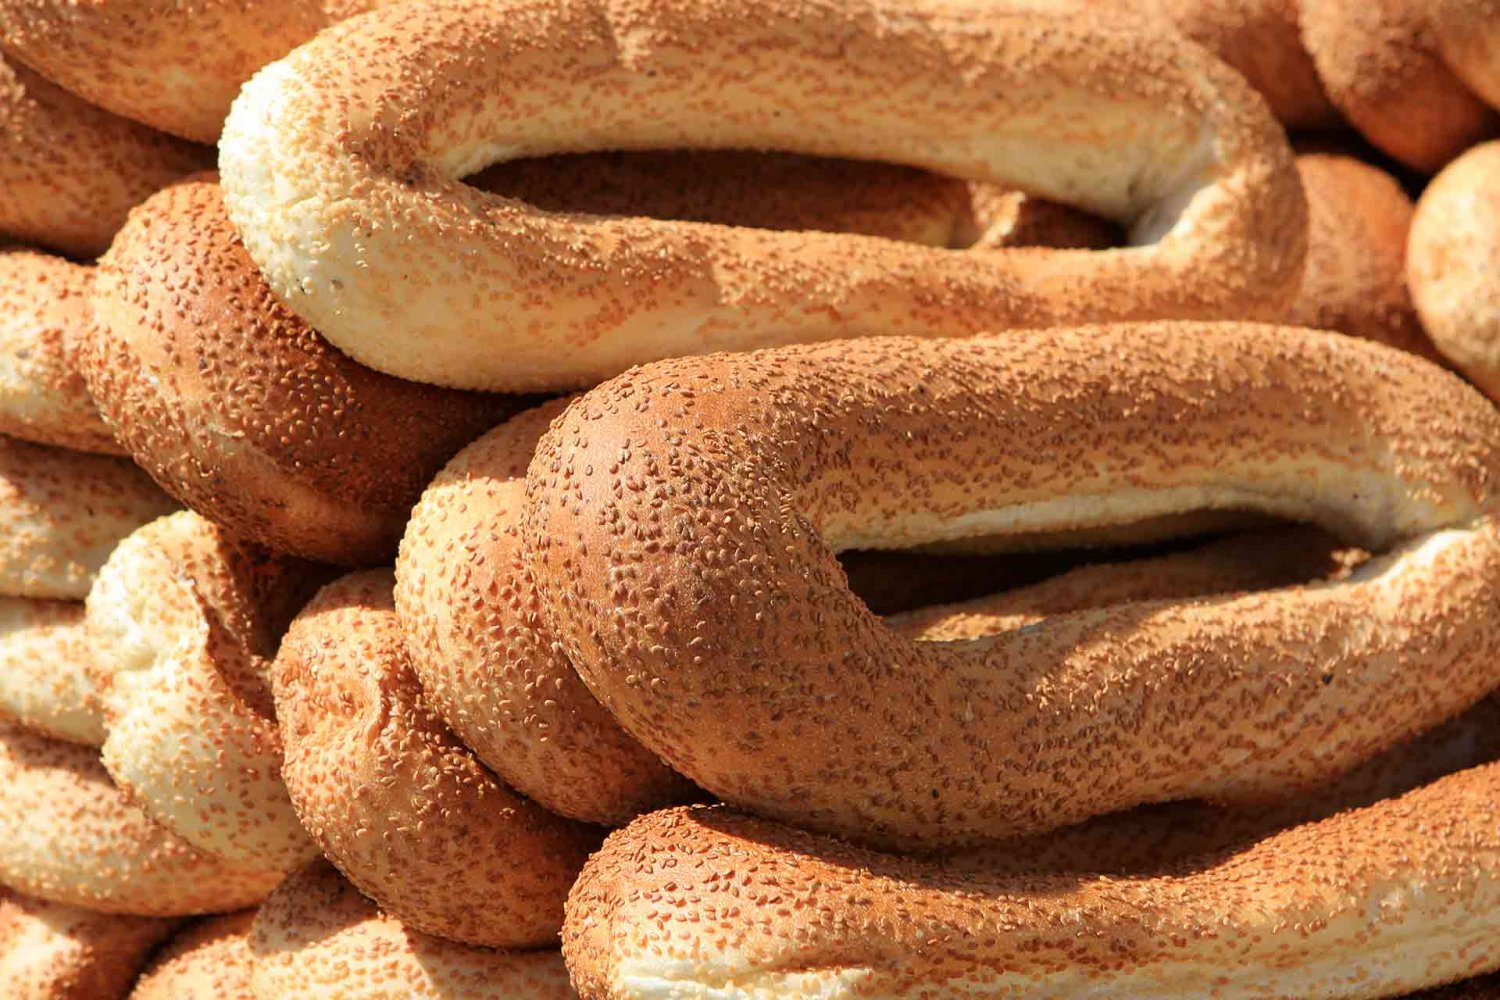 Long rings of Jerusalem's sesame bread, ka'ek al-quds